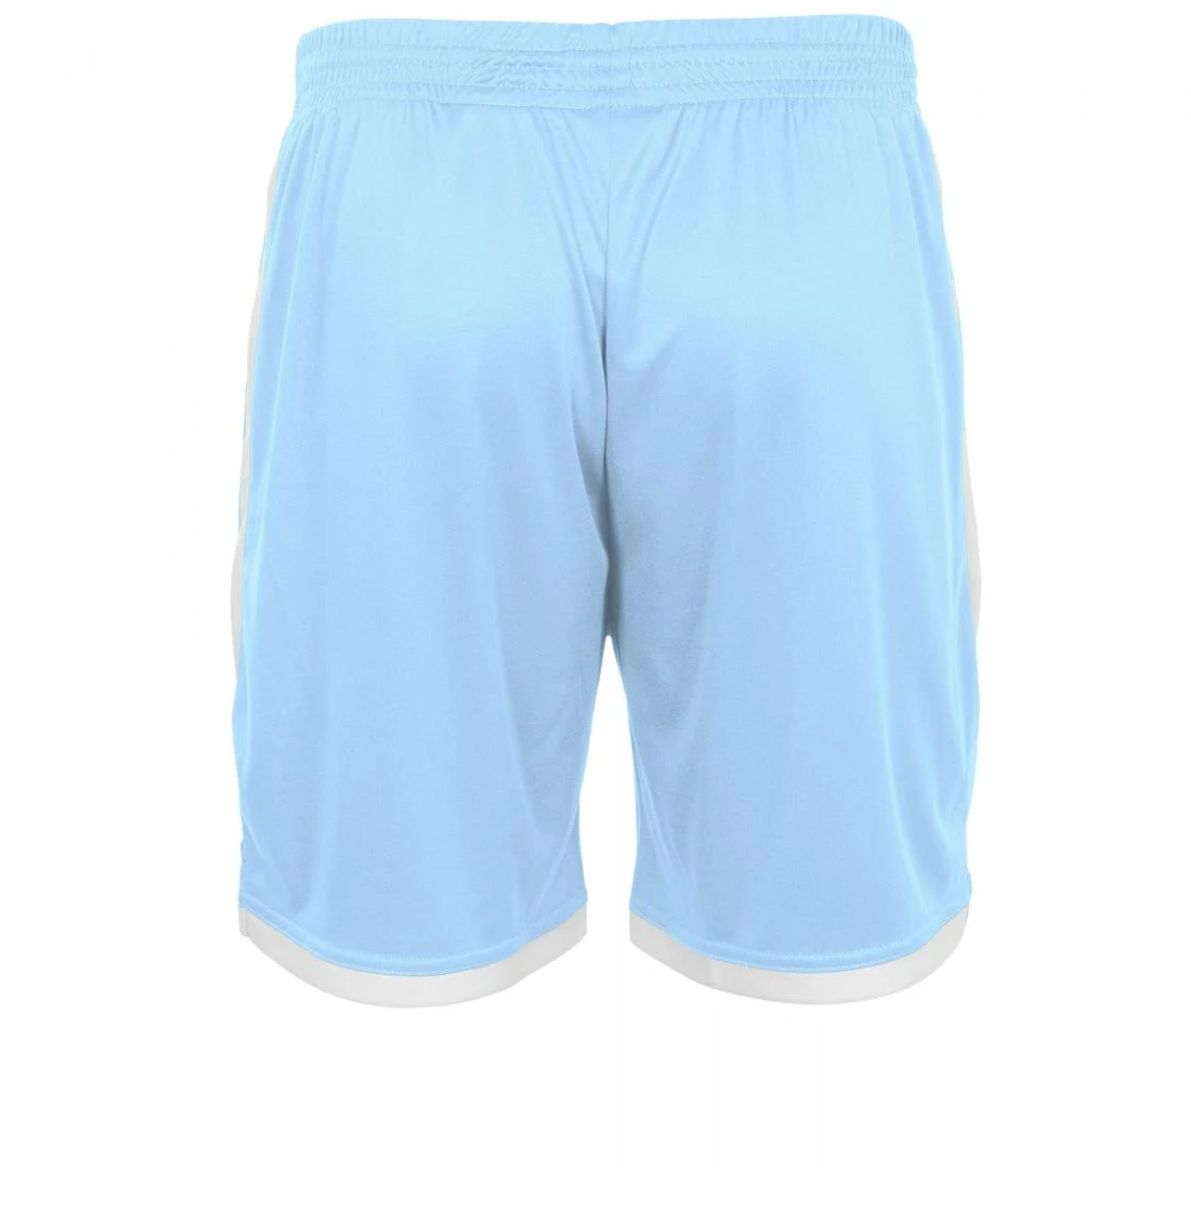 Stanno - Focus Shorts - Sky Blue & White